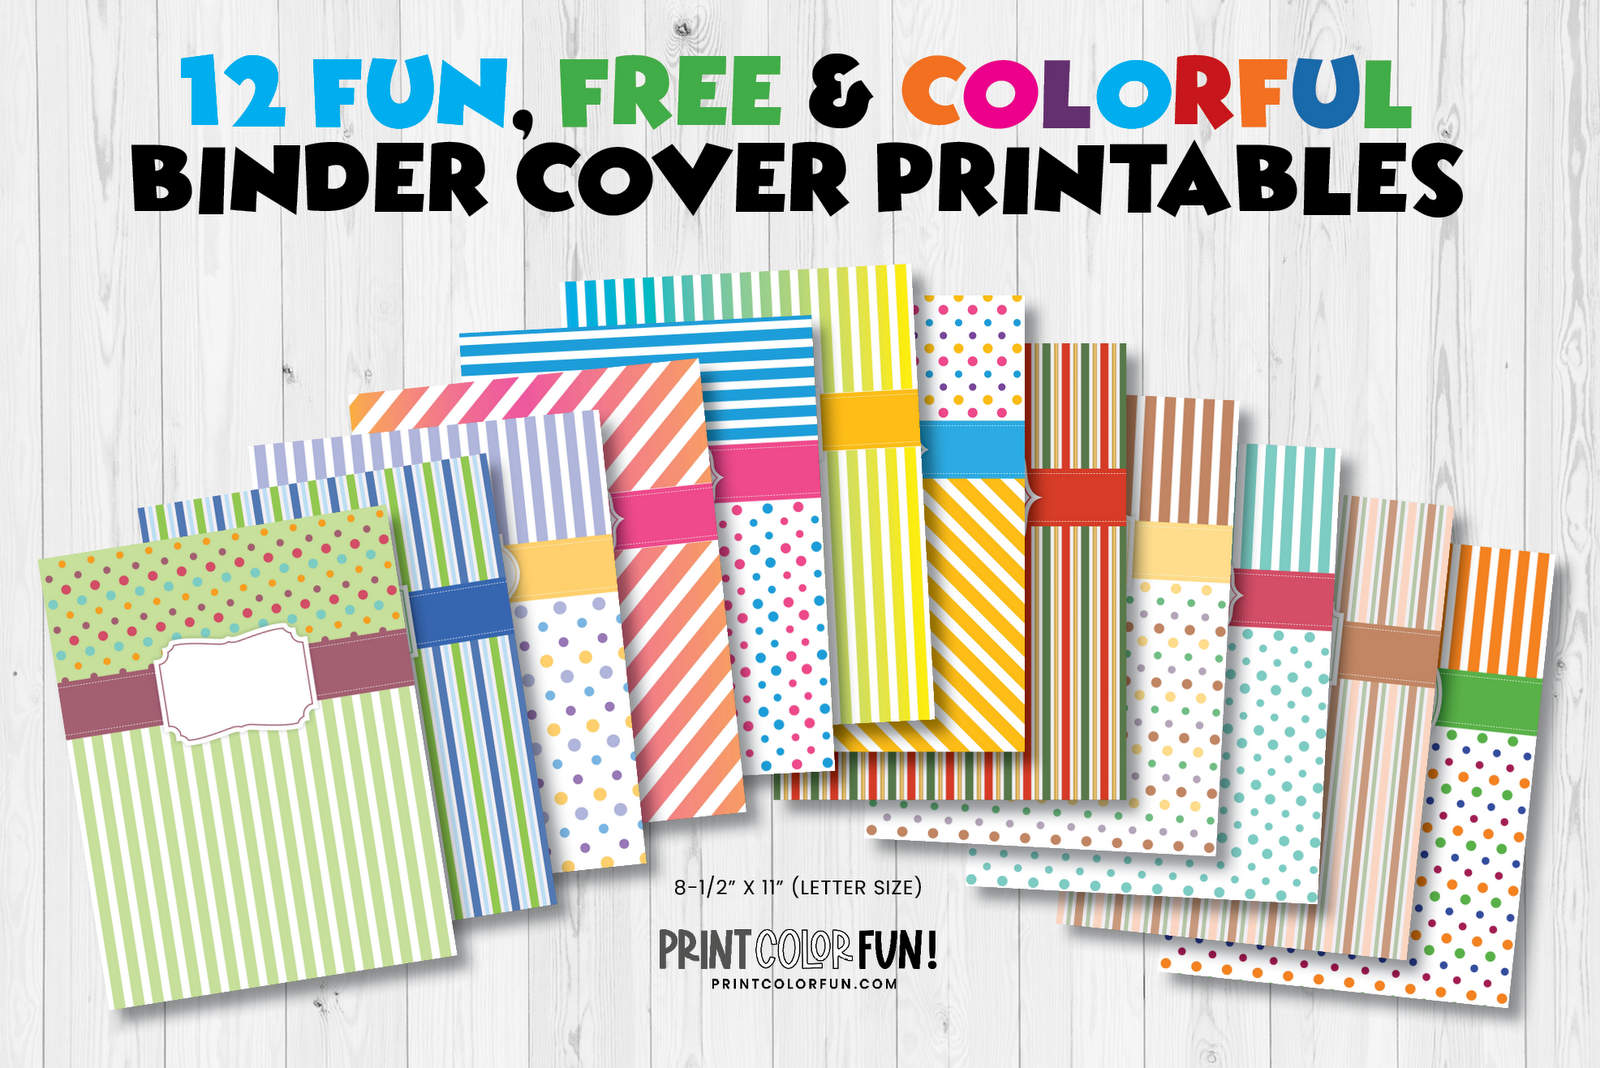 Printable binder covers - 12 free colorful sets at Print Color Fun com